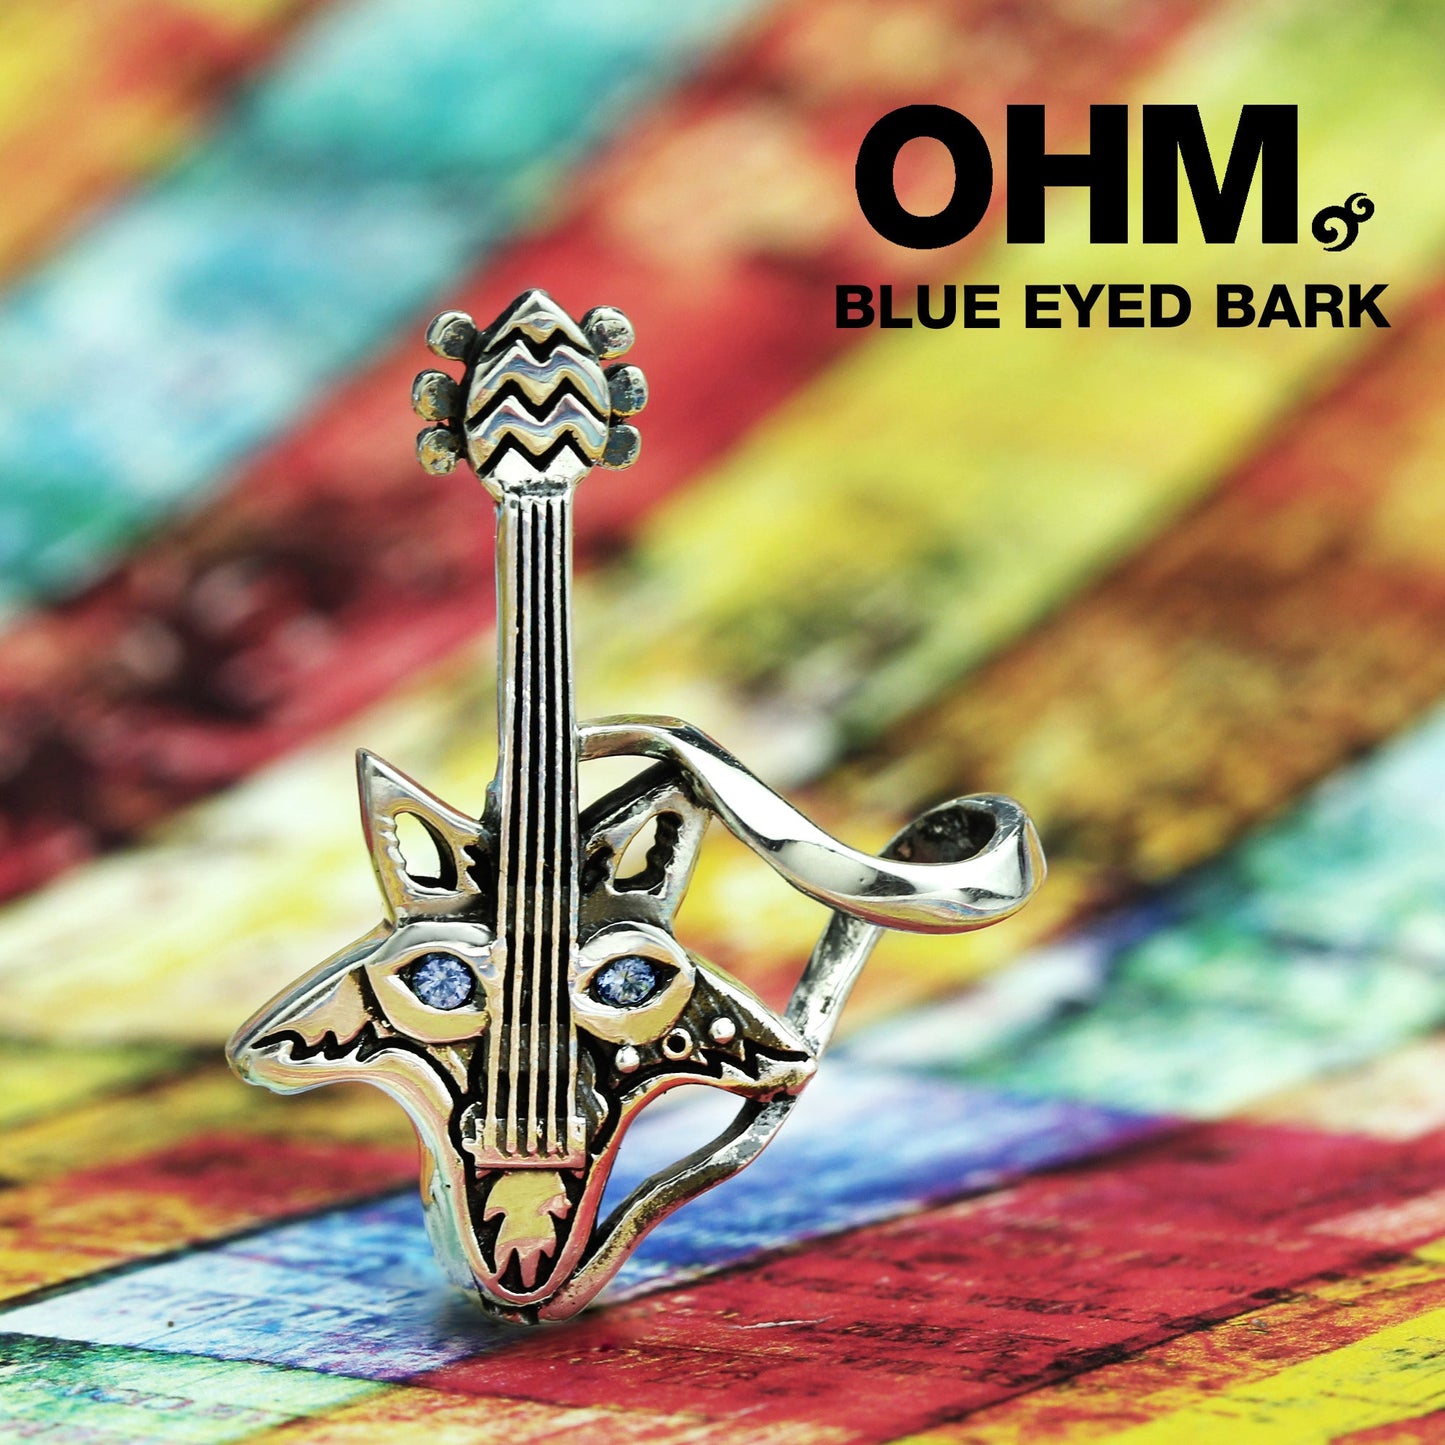 Blue Eyed Bark - Limited Edition